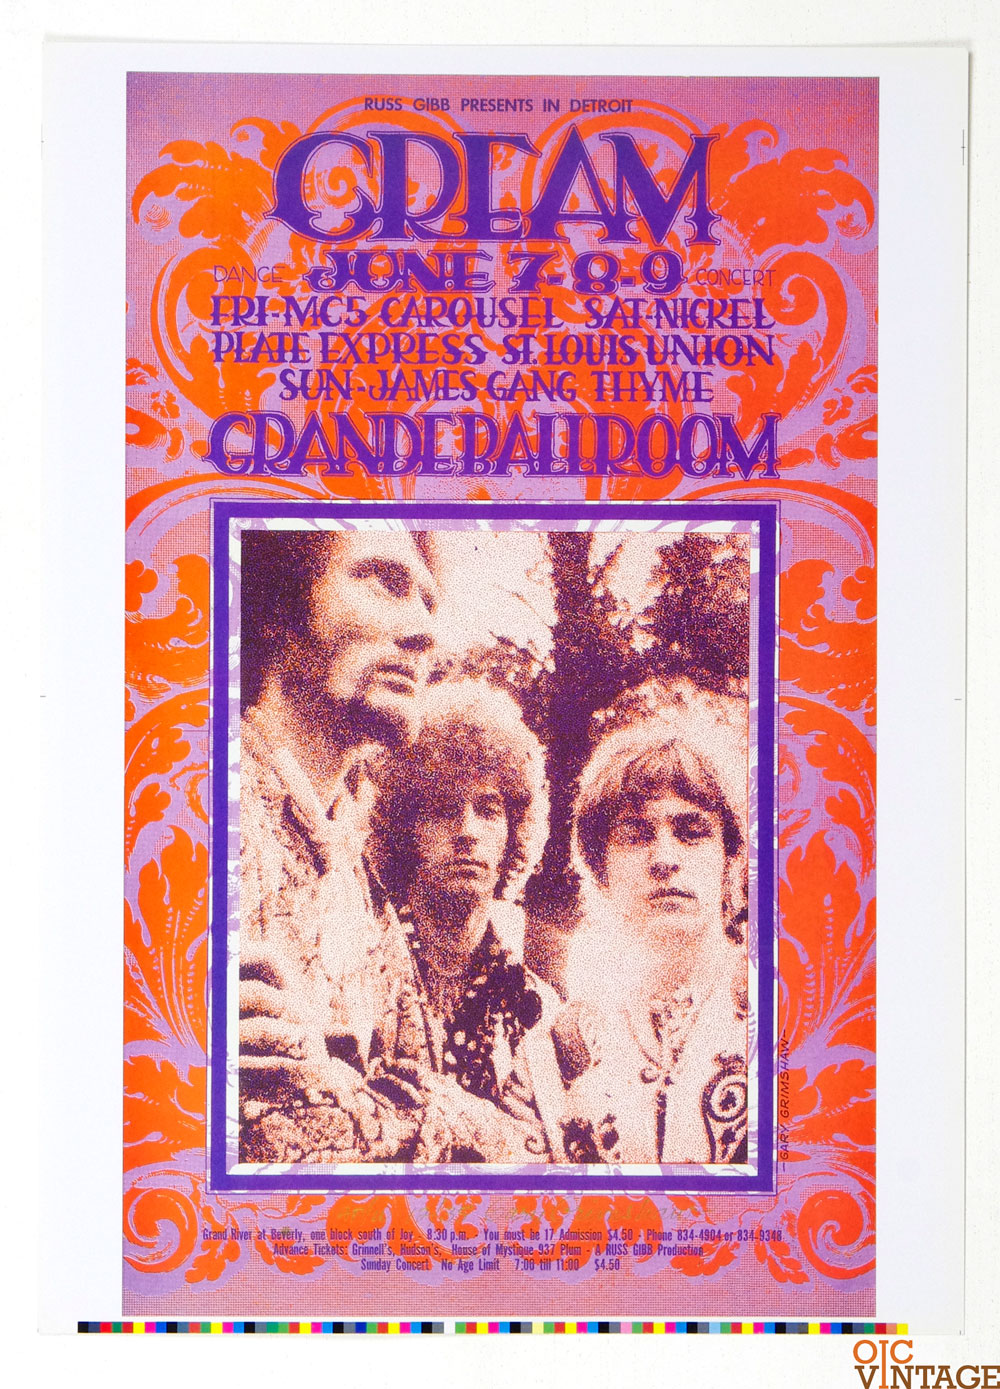 Cream Poster 1968 Grande Ballroom Gary Grimshaw signed 2nd Printing 2005